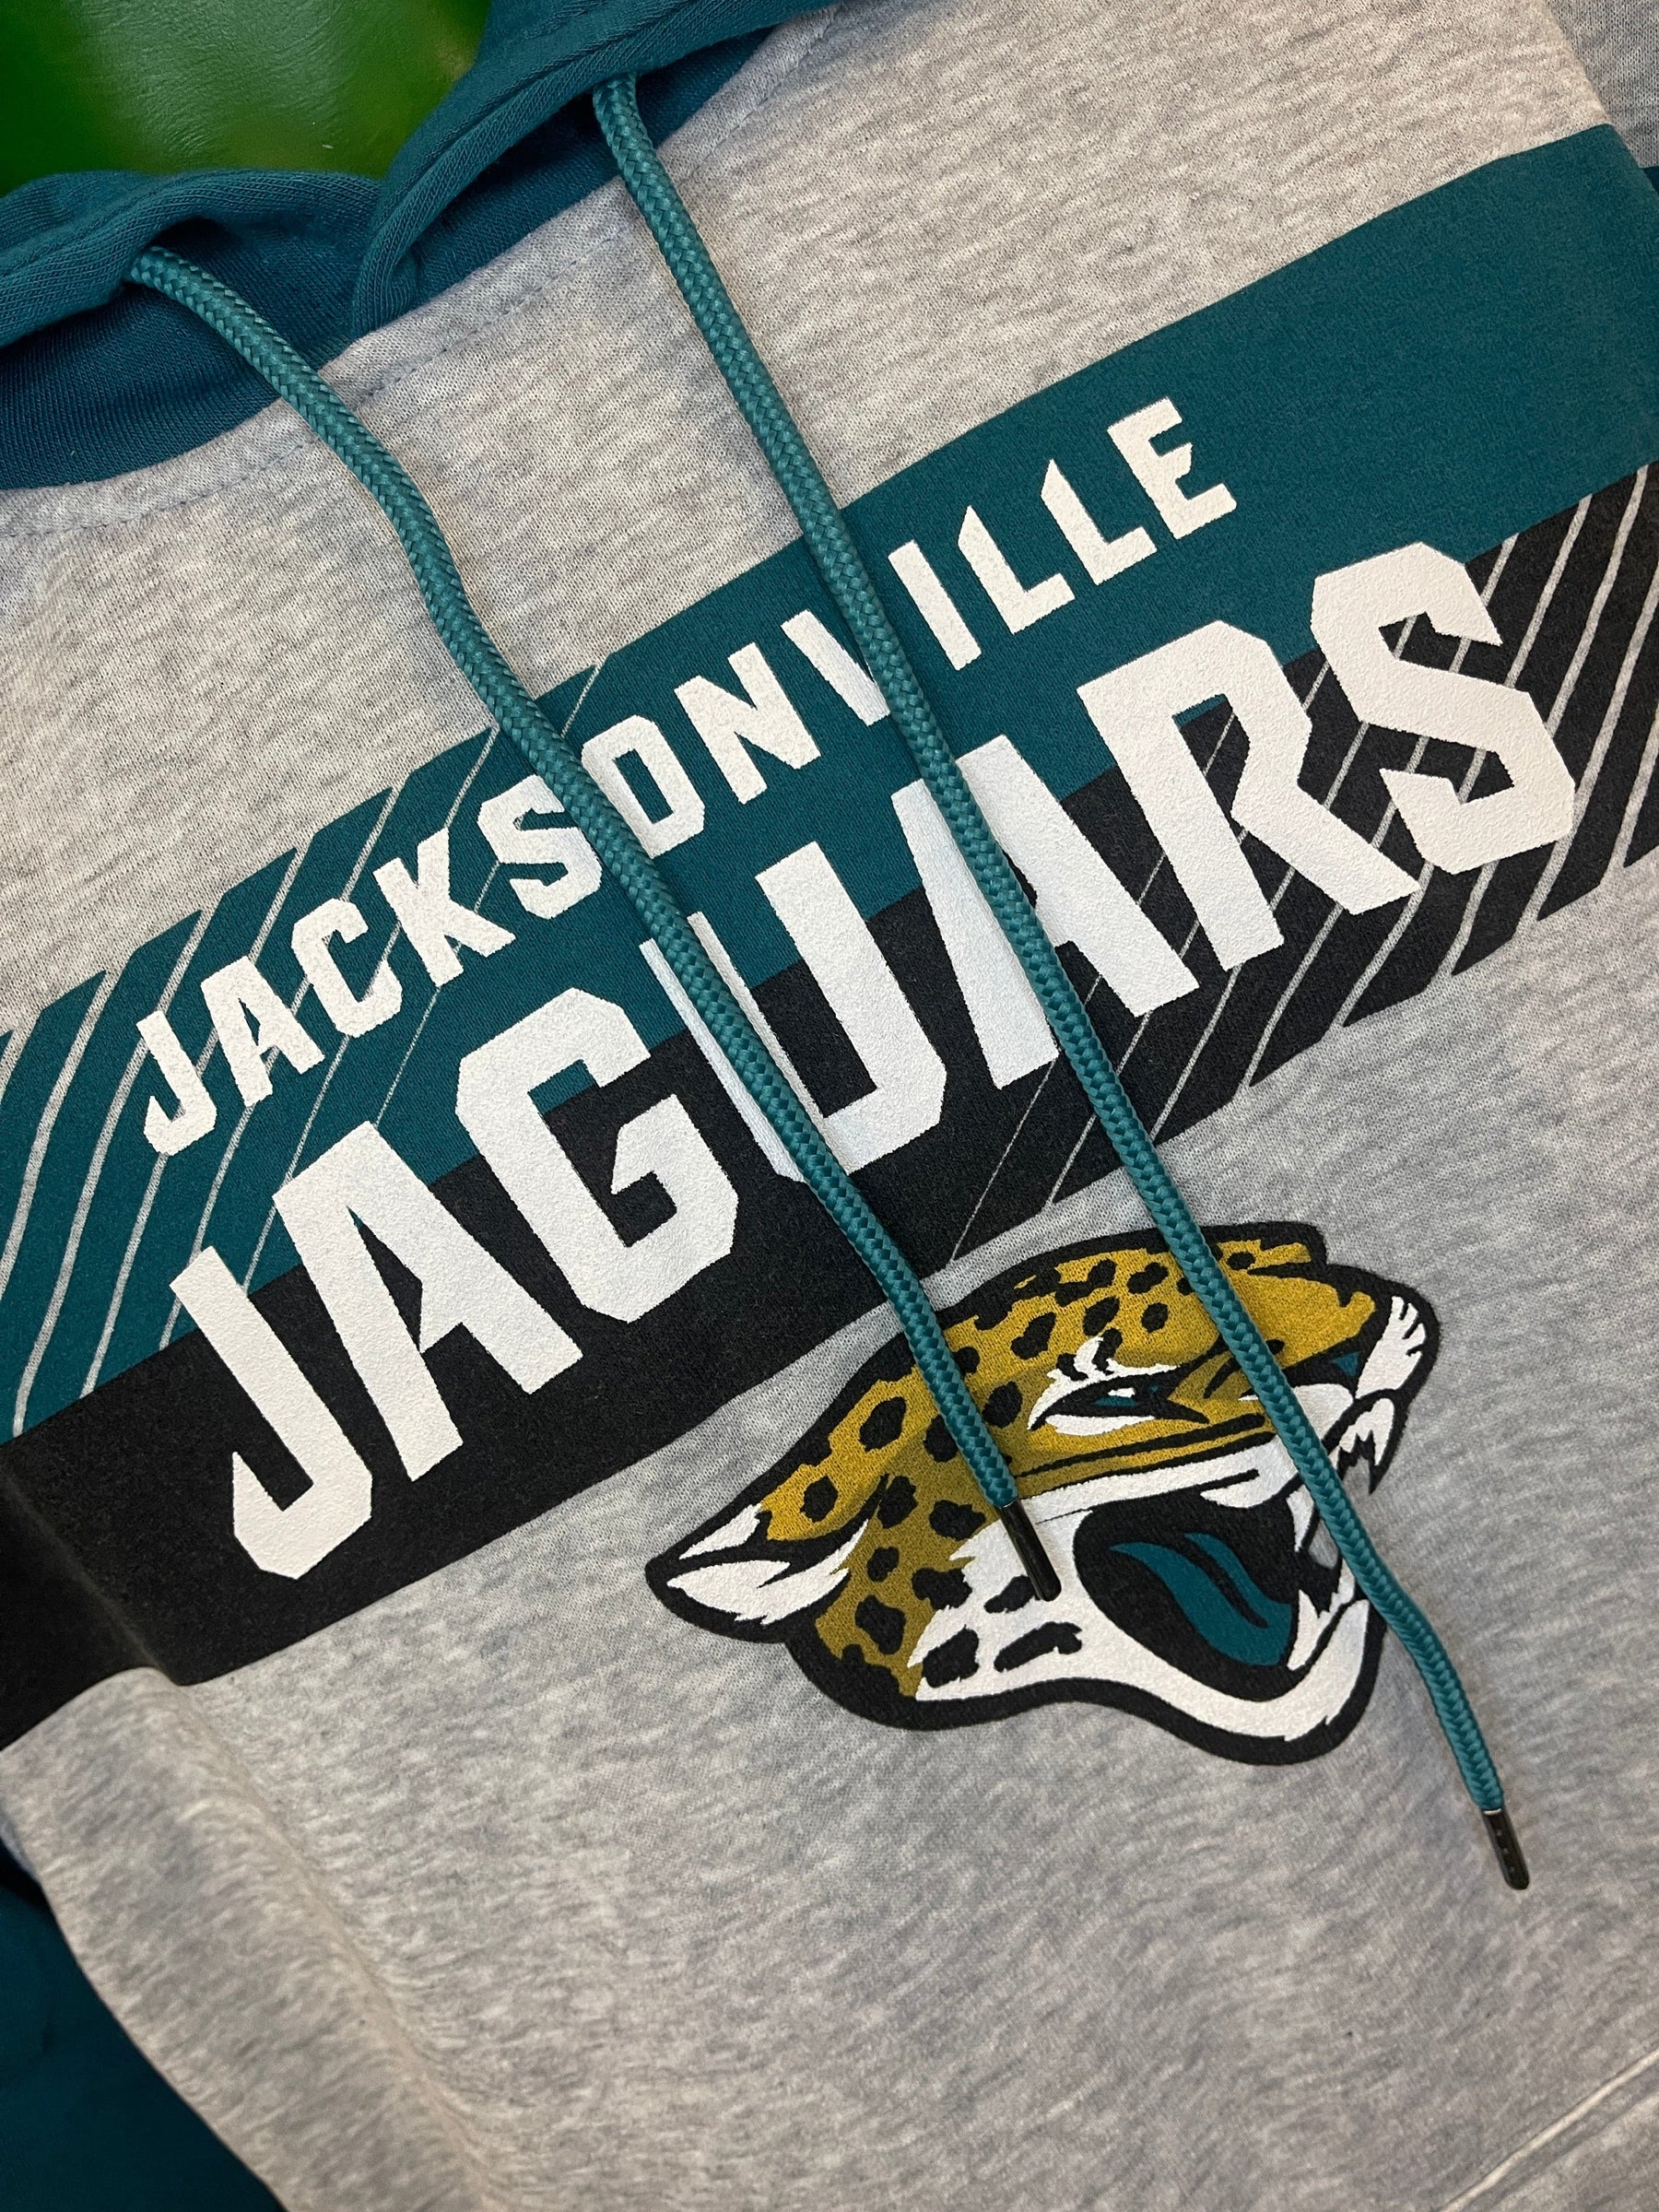 NFL Jacksonville Jaguars Grey Colourblock Hoodie Men's Large NWT